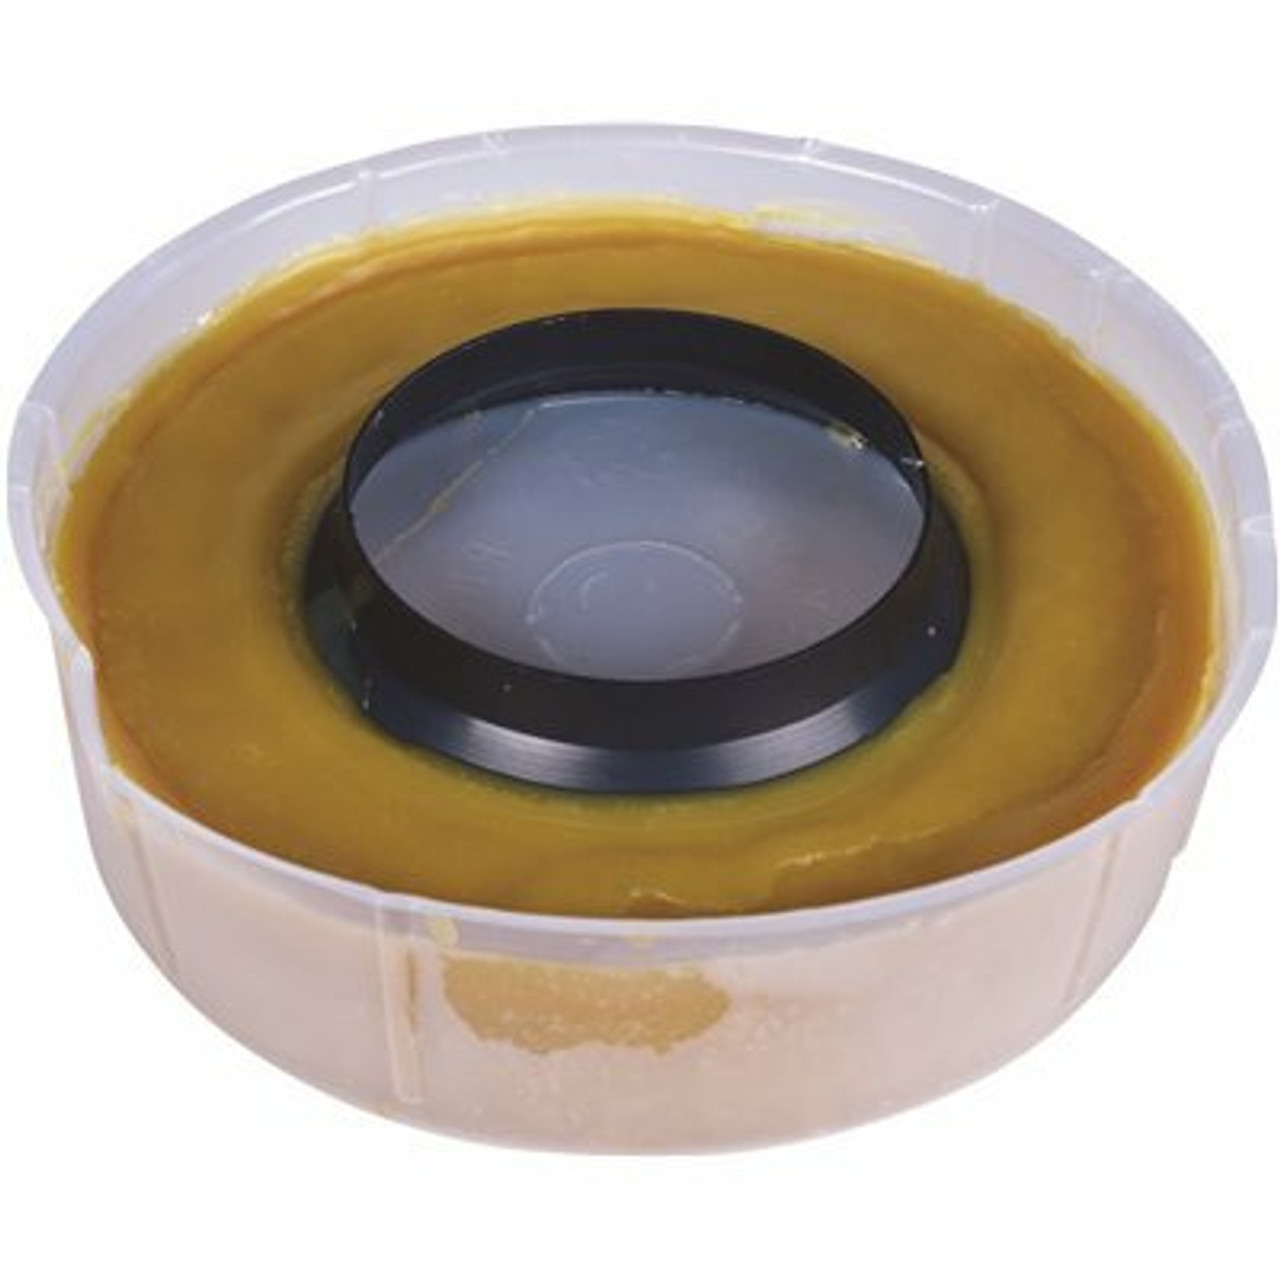 Hercules Johni-Ring 3 In. - 4 In. Jumbo Toilet Wax Ring With Plastic Horn